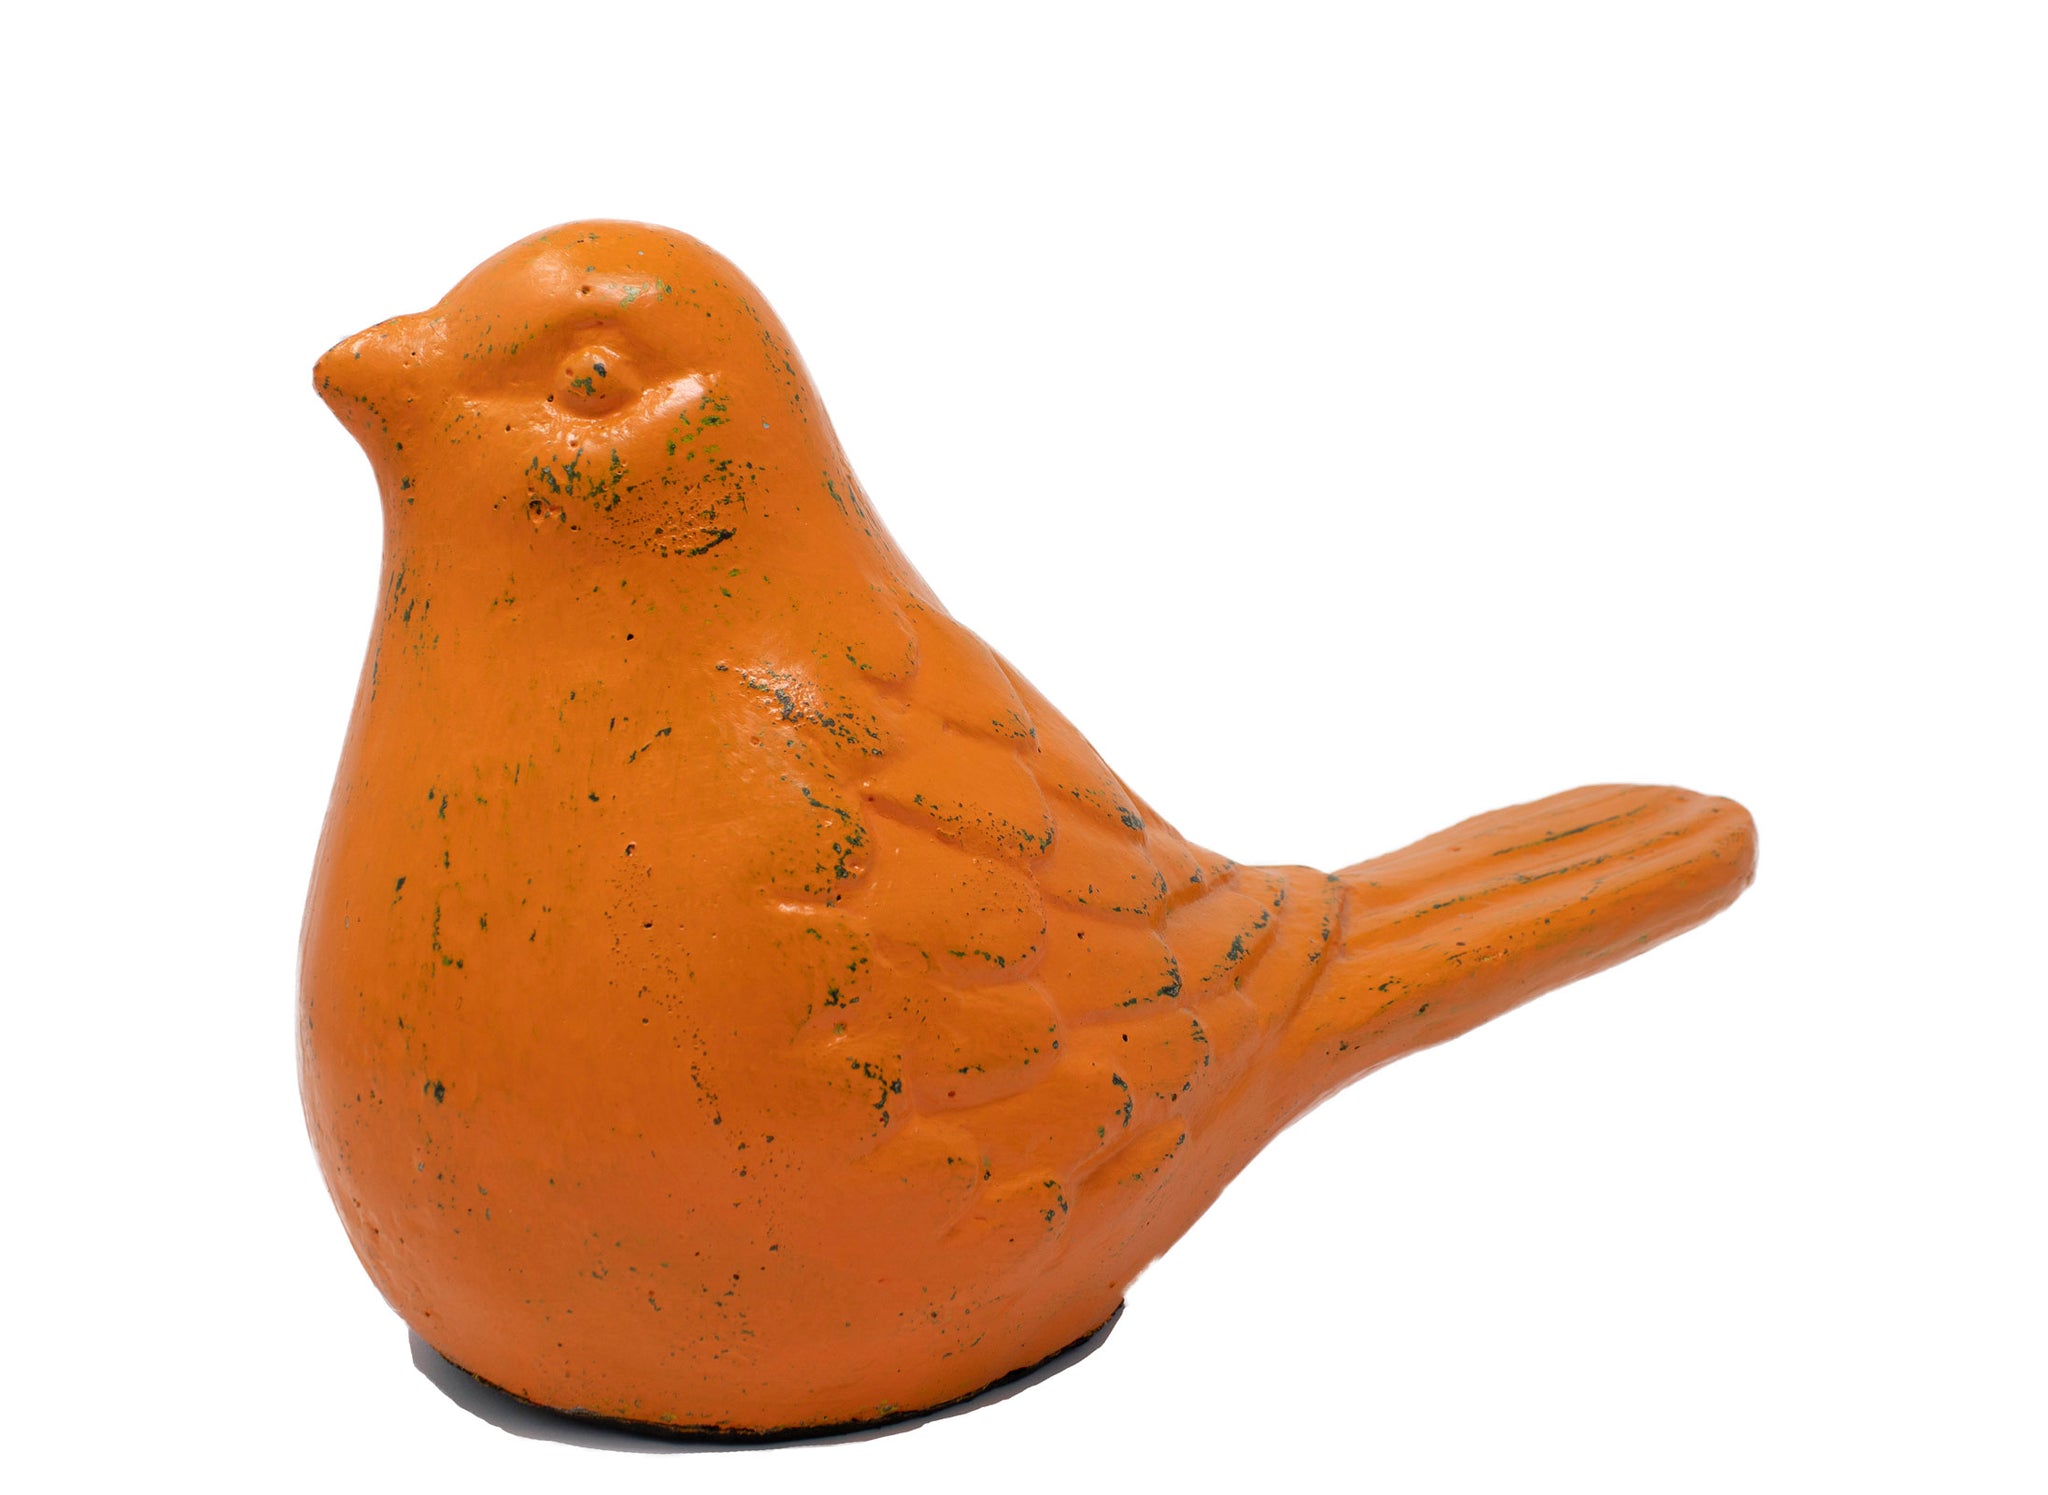 Oliver Bird - Small - Orange